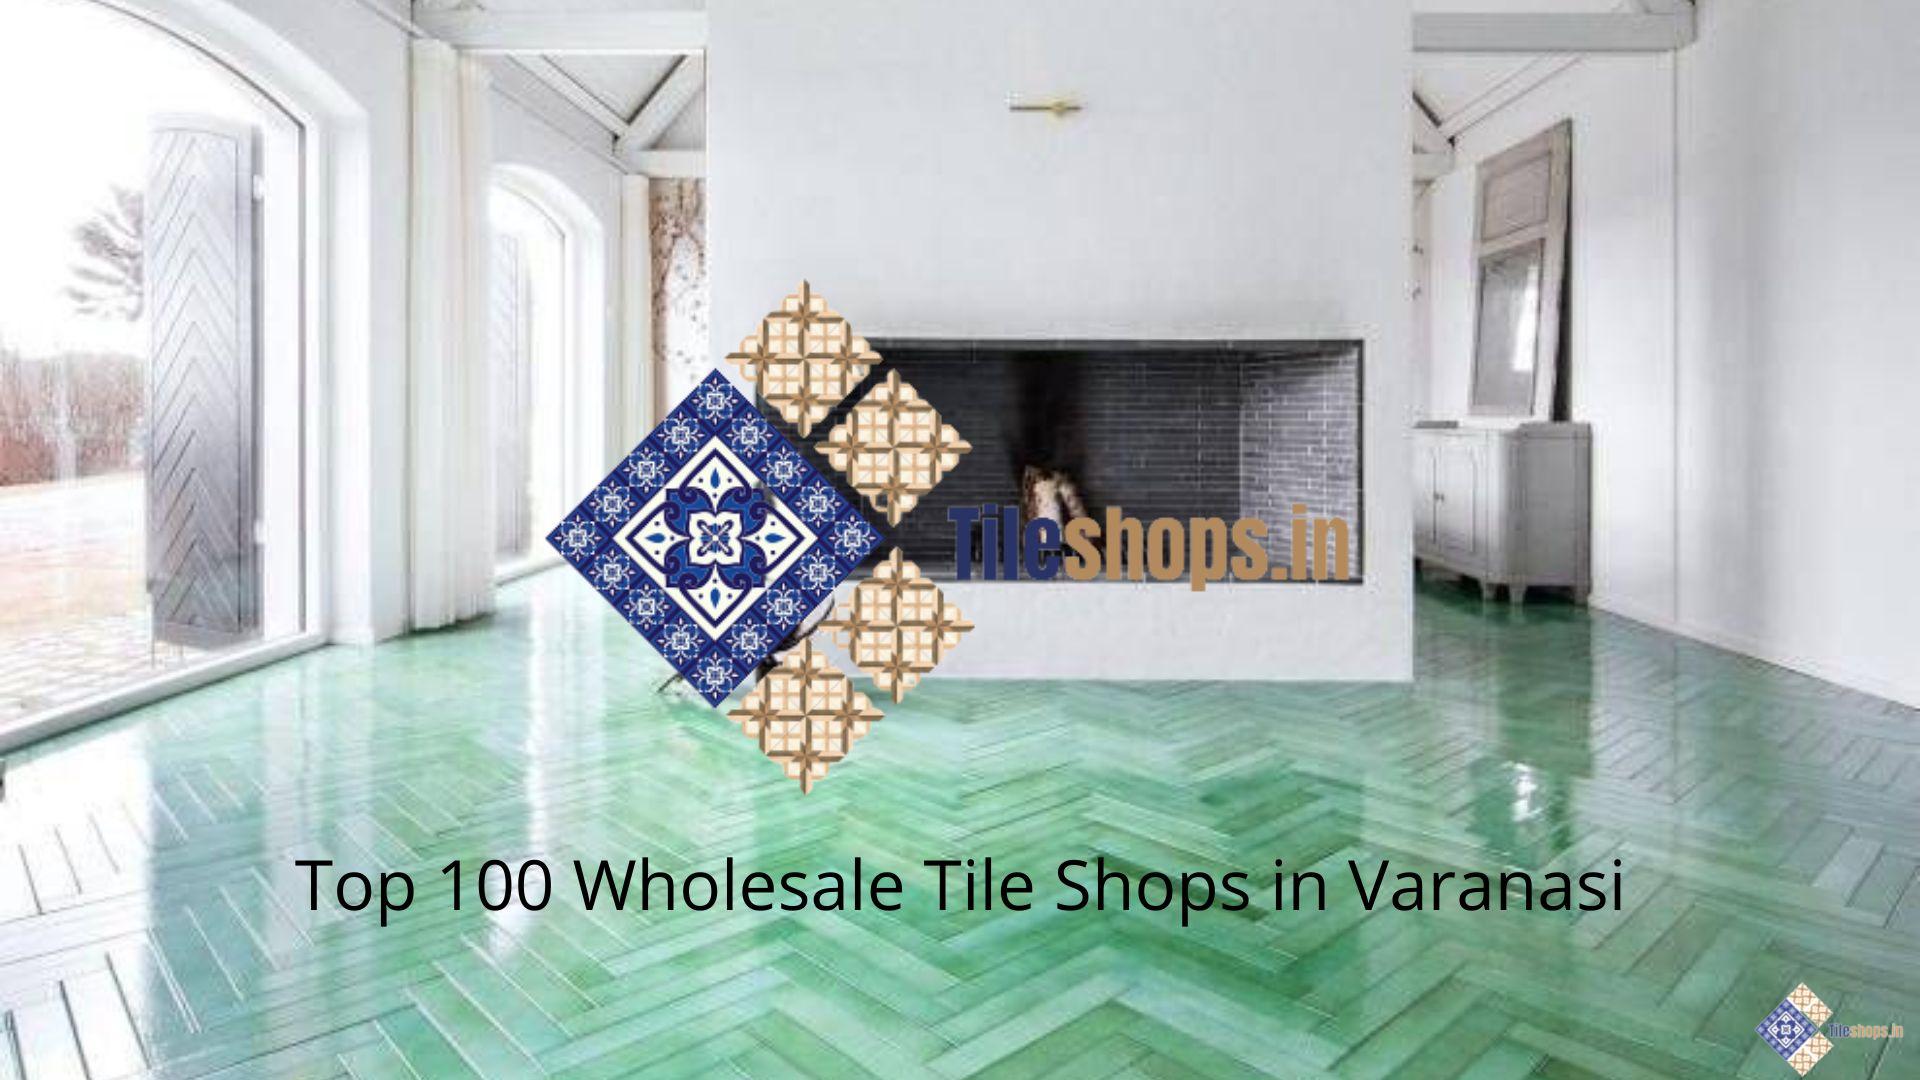 Top 100 Wholesale Tile Shops in Varanasi